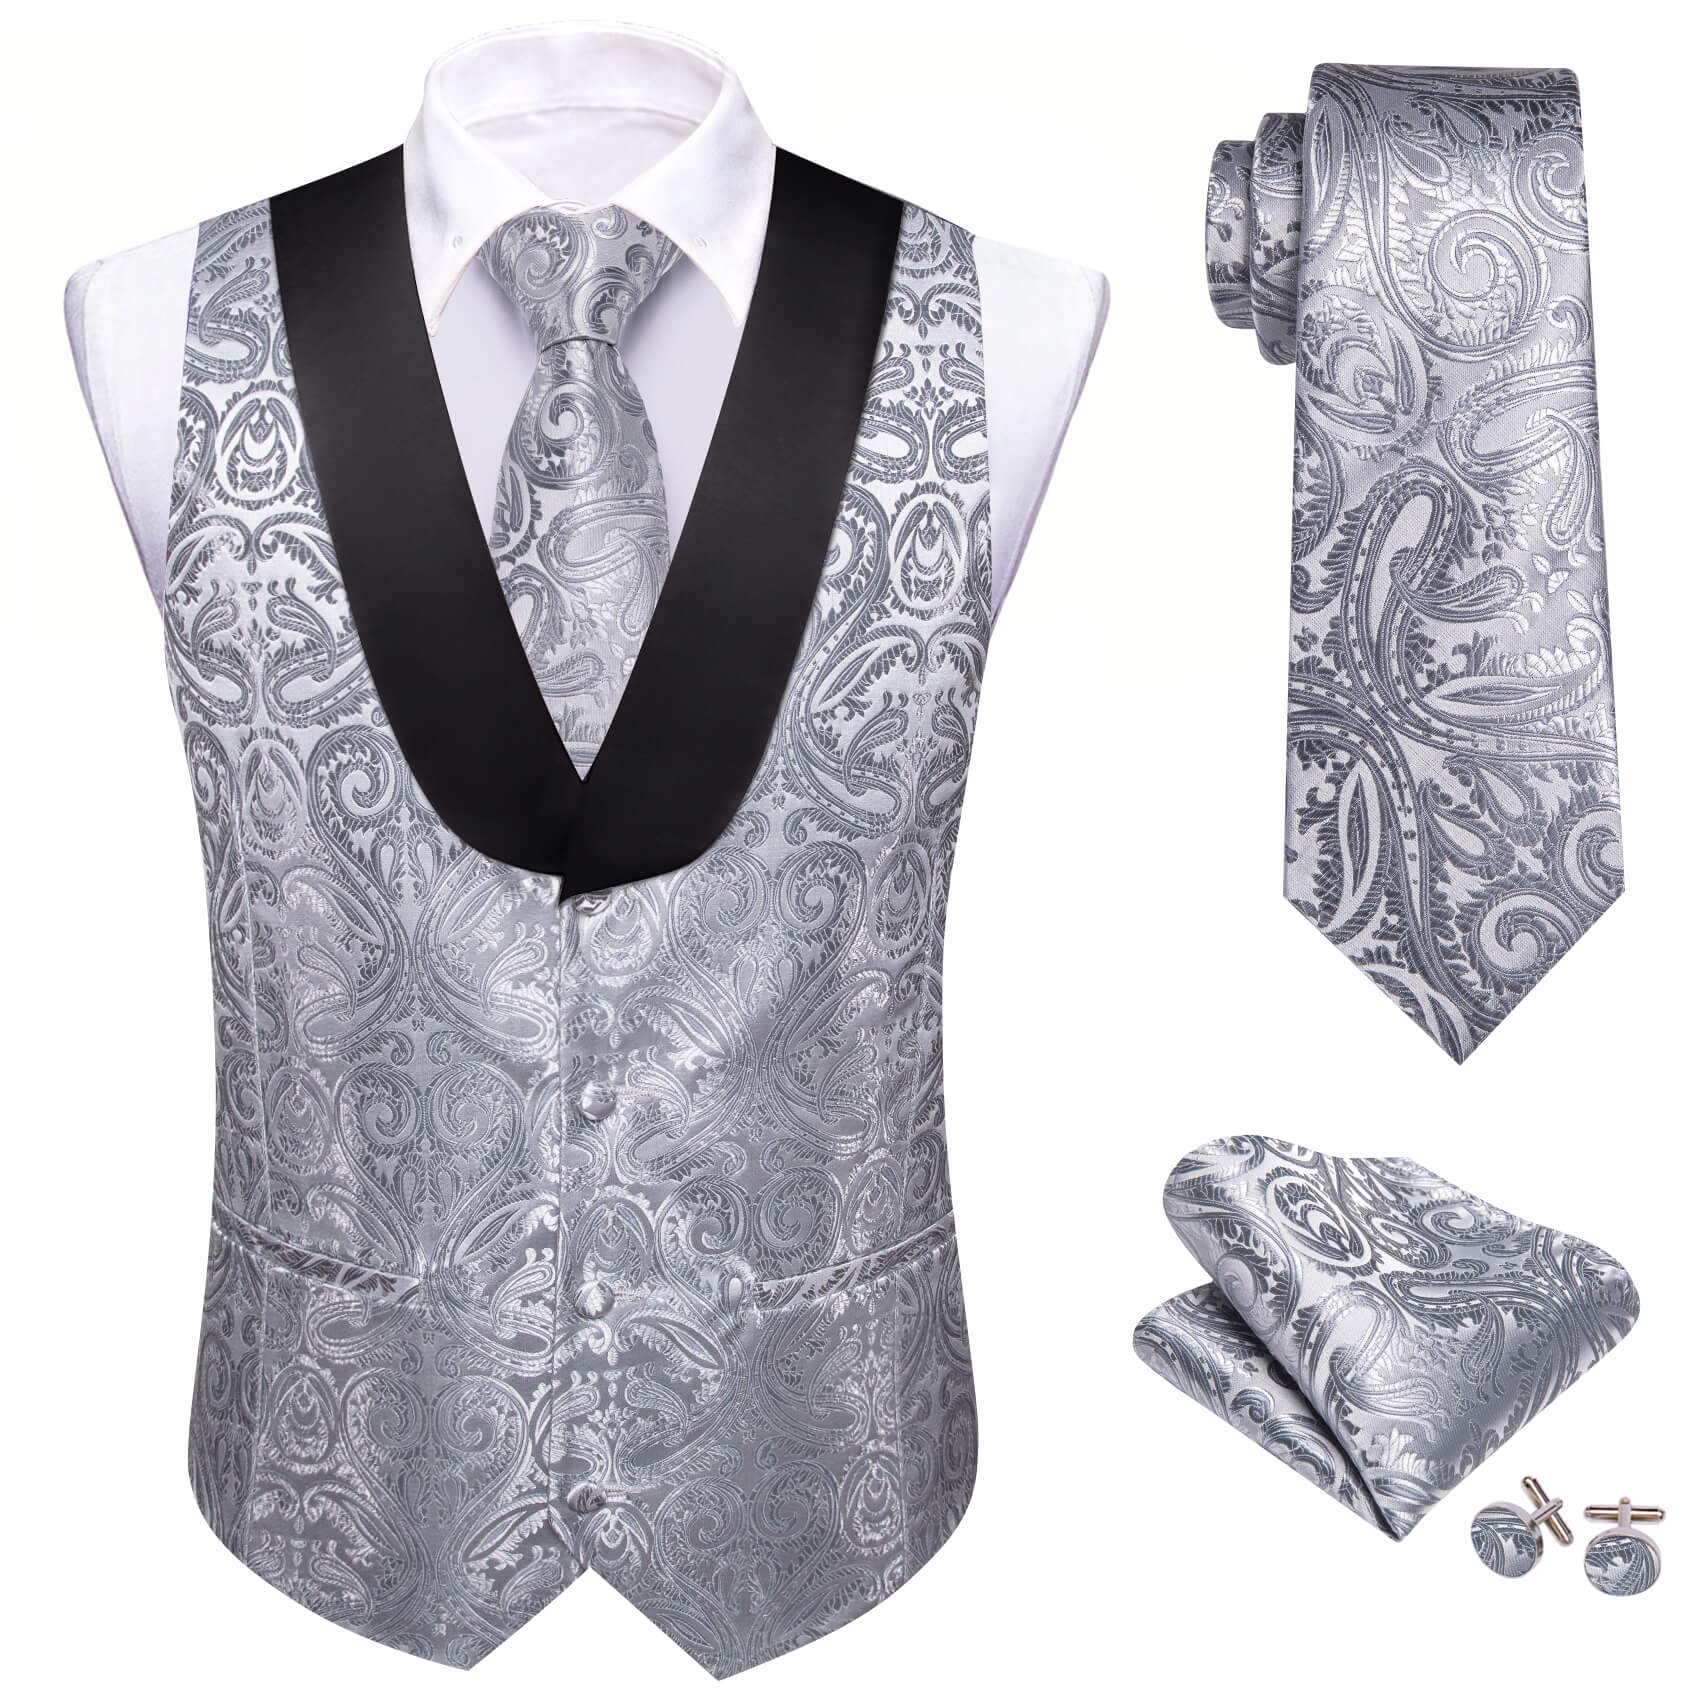 Barry.wang Shawl Collar Vest Dark Gray Paisley Silk Men's Vest Tie Set